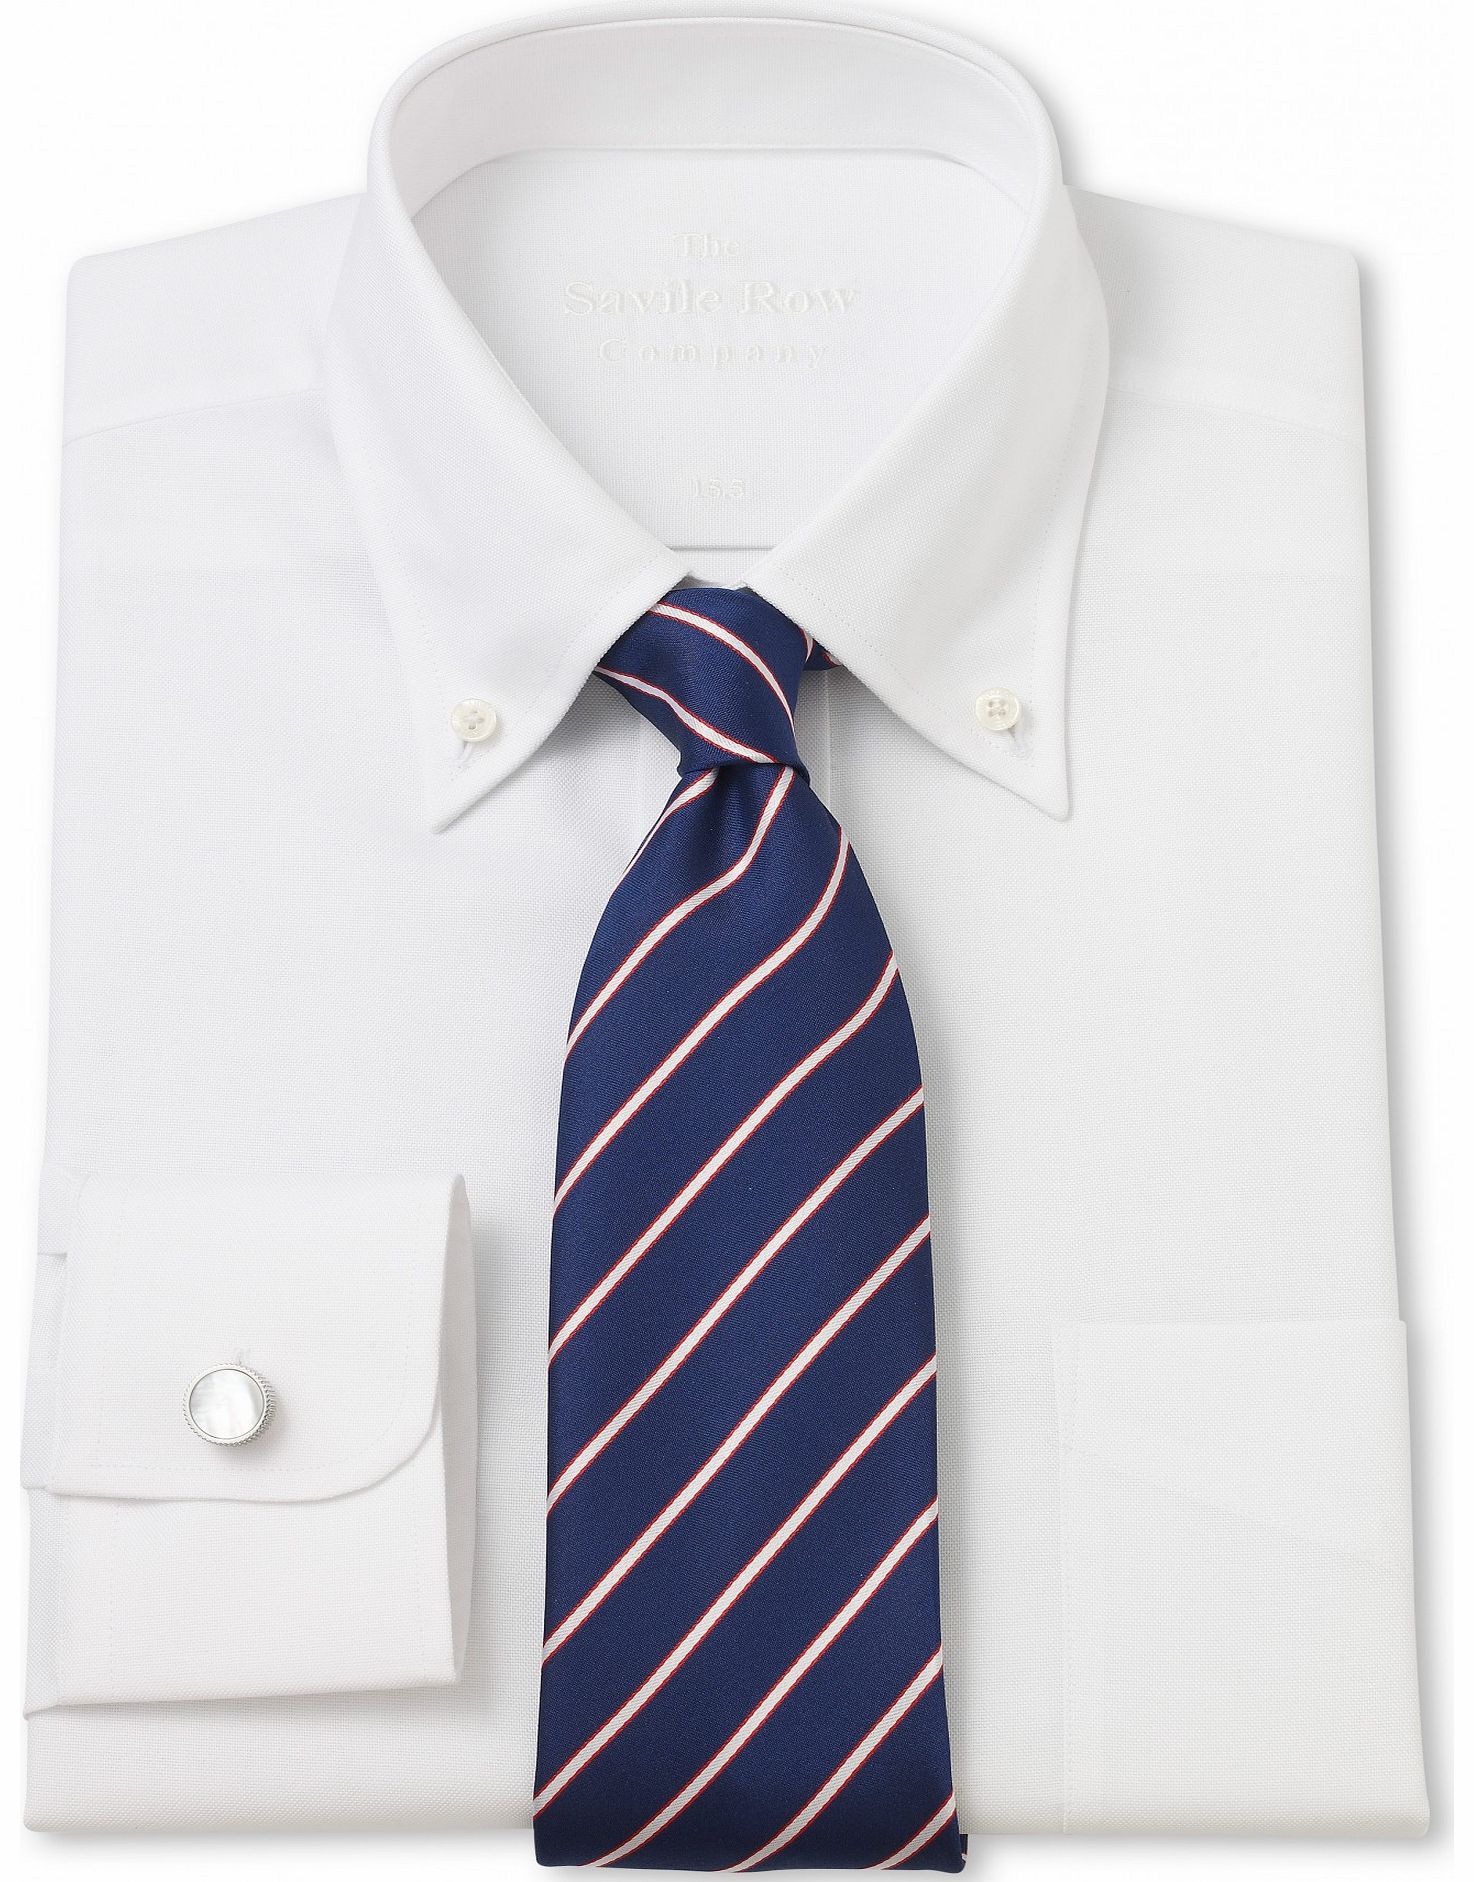 Savile Row Company White Oxford Button Down Classic Shirt 19``